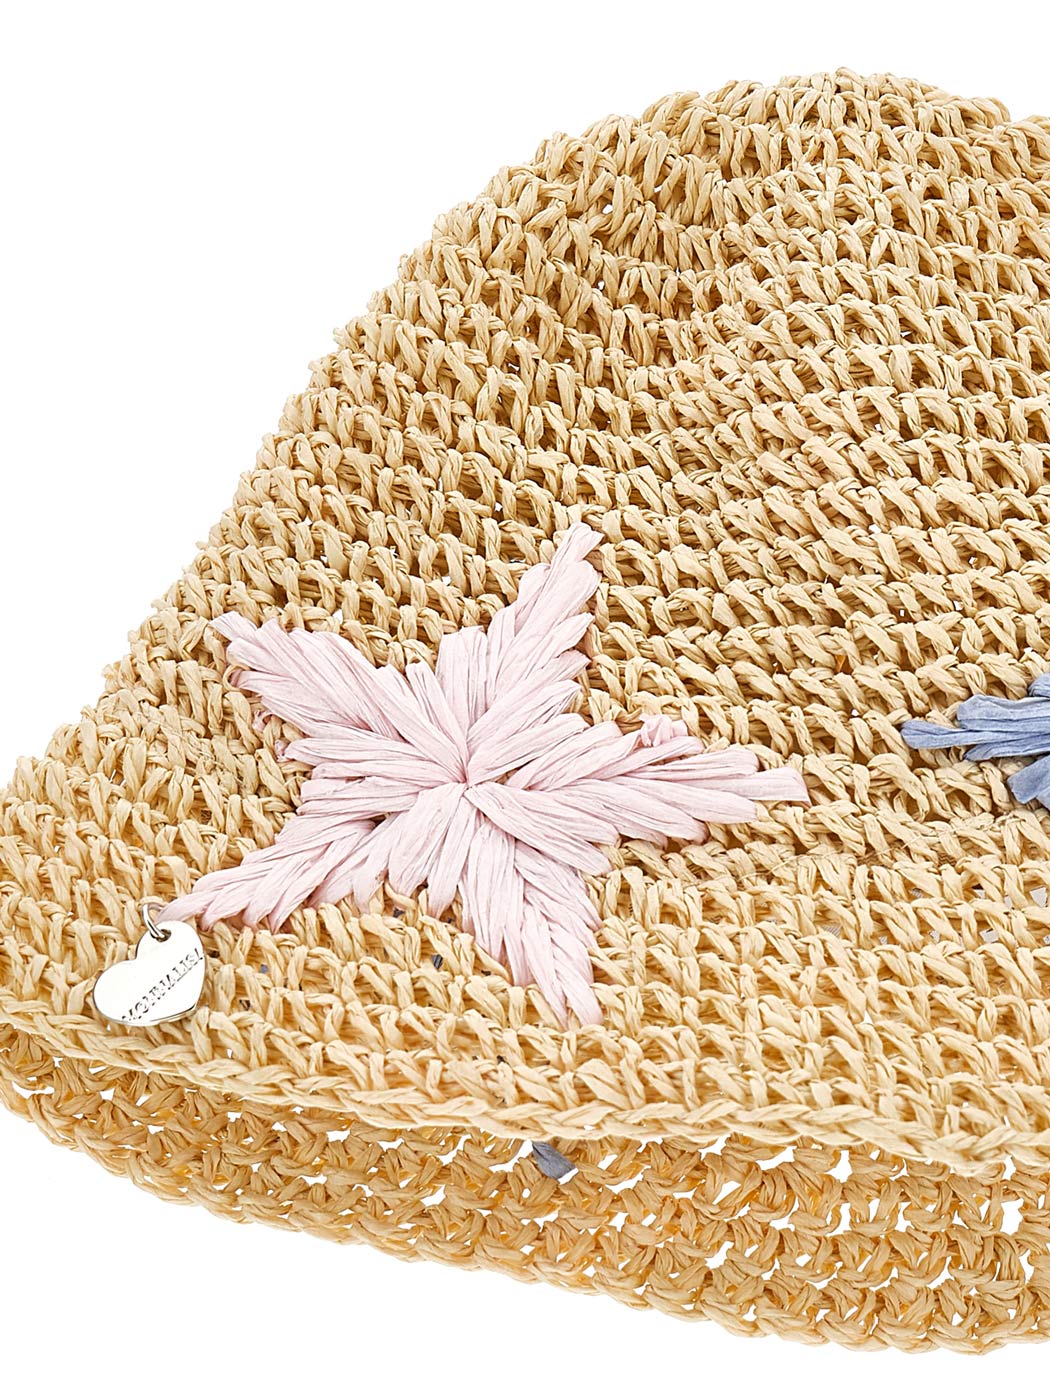 Monnalisa straw hat for girl-19C065